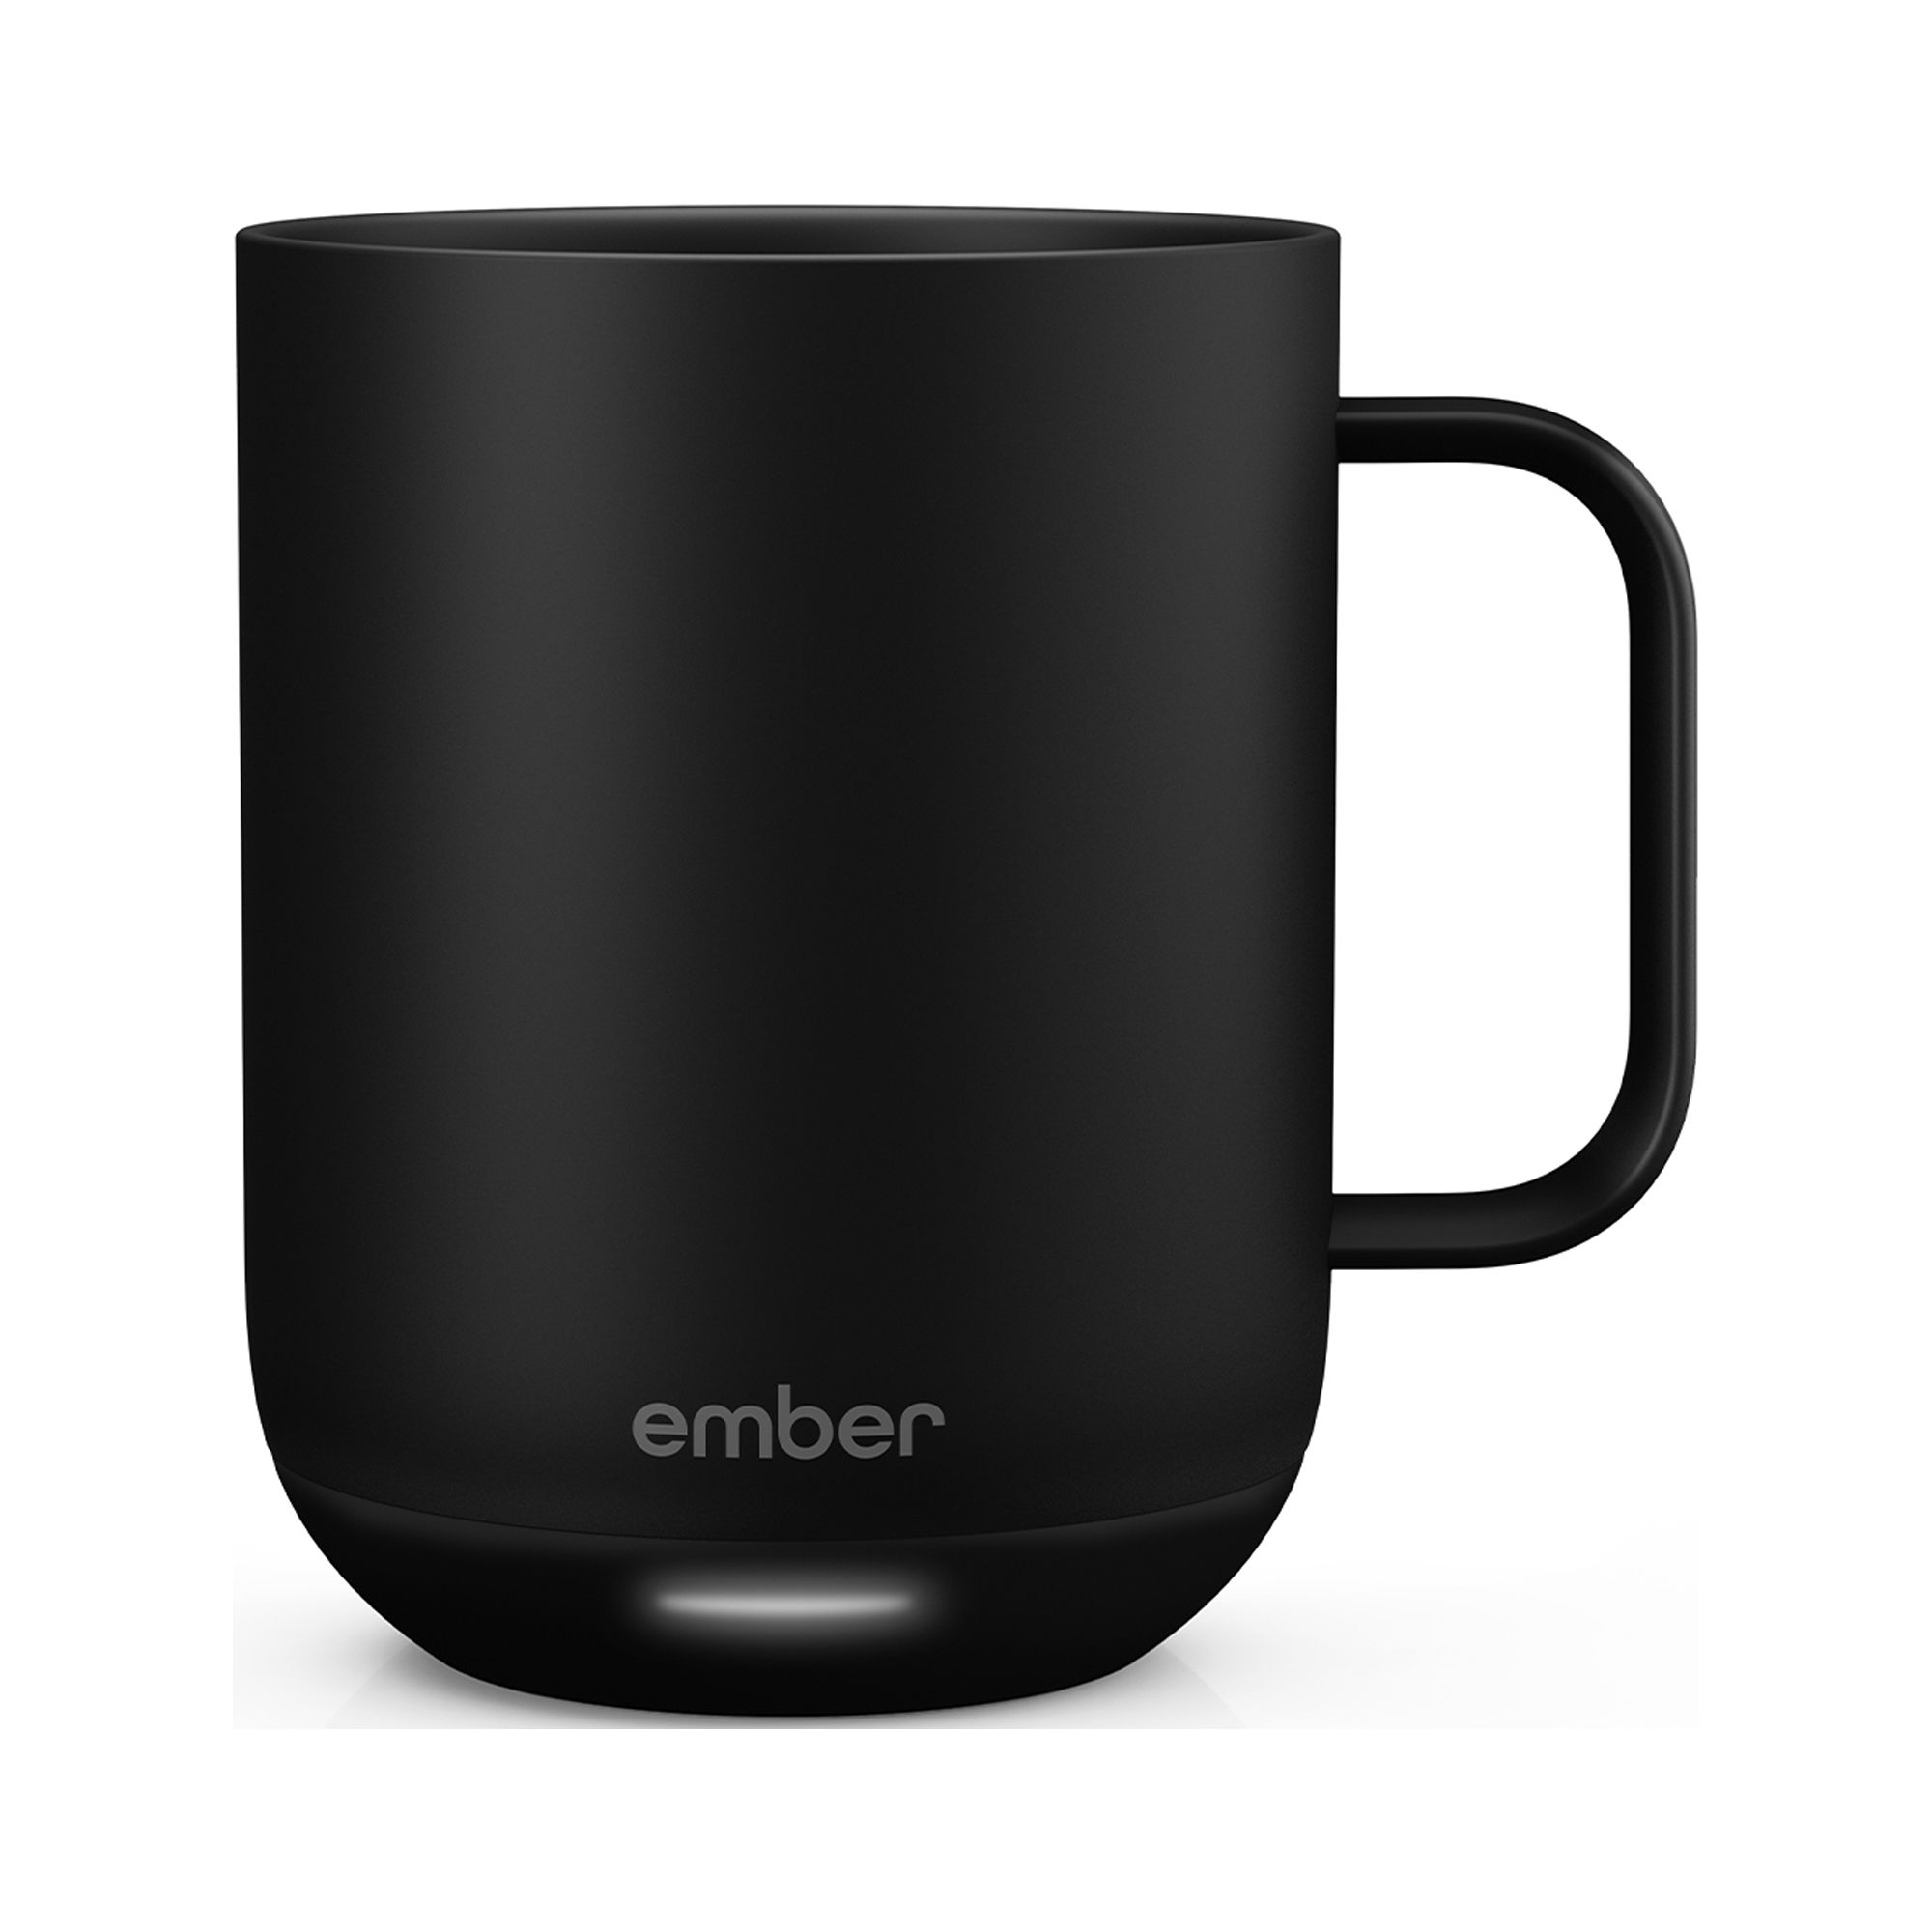 Ember Temperature Control Smart Mug 2, 10 oz, Black 1.5-hr Battery Life App Controlled Heated Coffee Mug - image 1 of 6